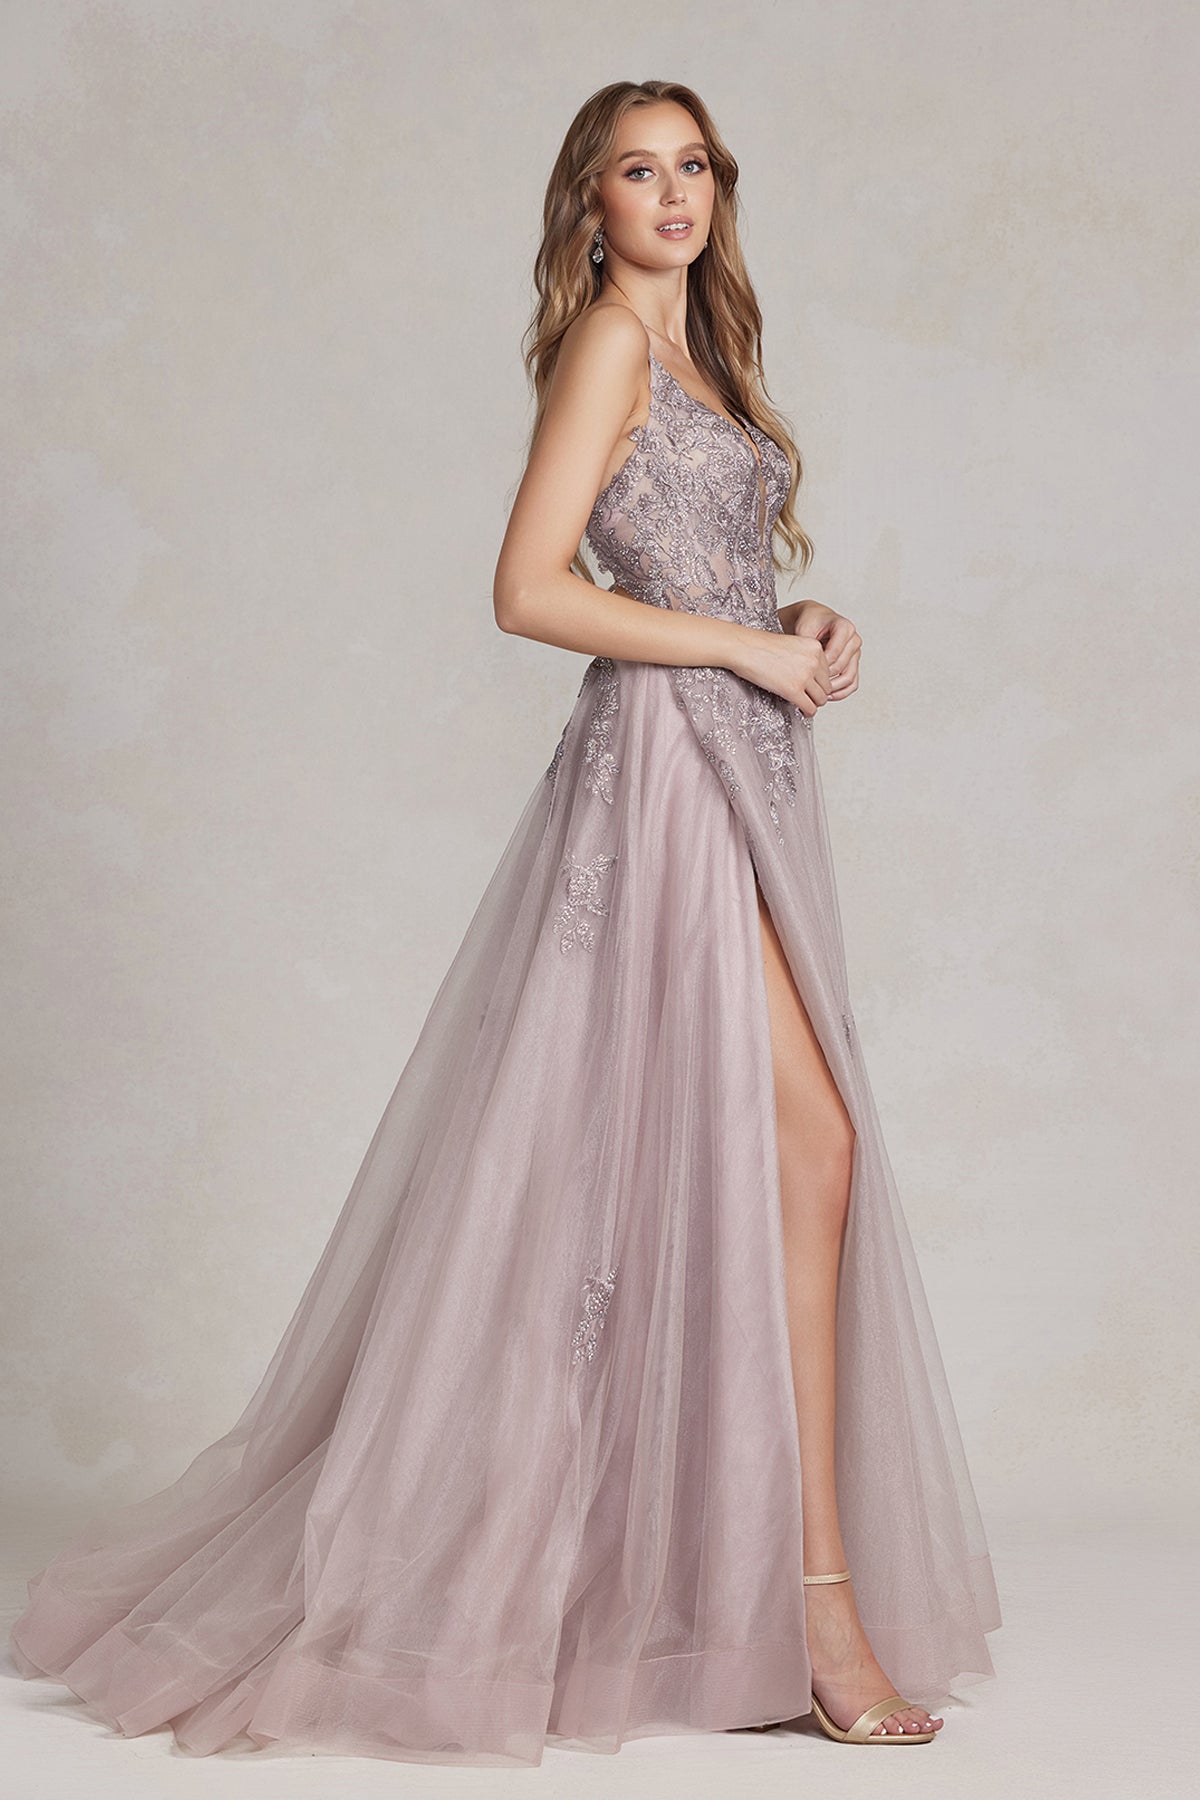 Shimmery Strap Back A-Line Dress With Side Slit